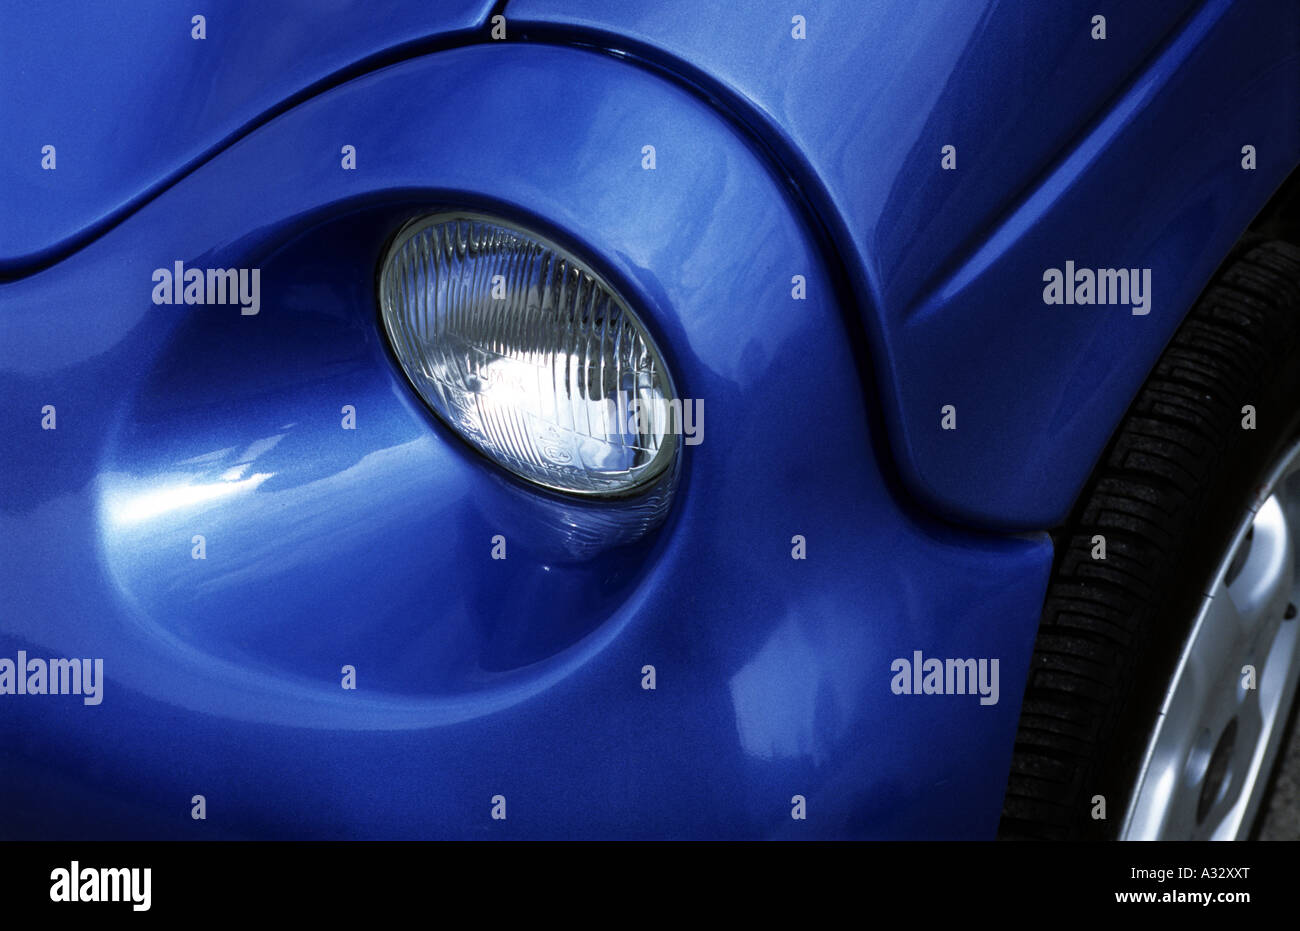 Headlight on a Reva G-Wiz electric car Stock Photo